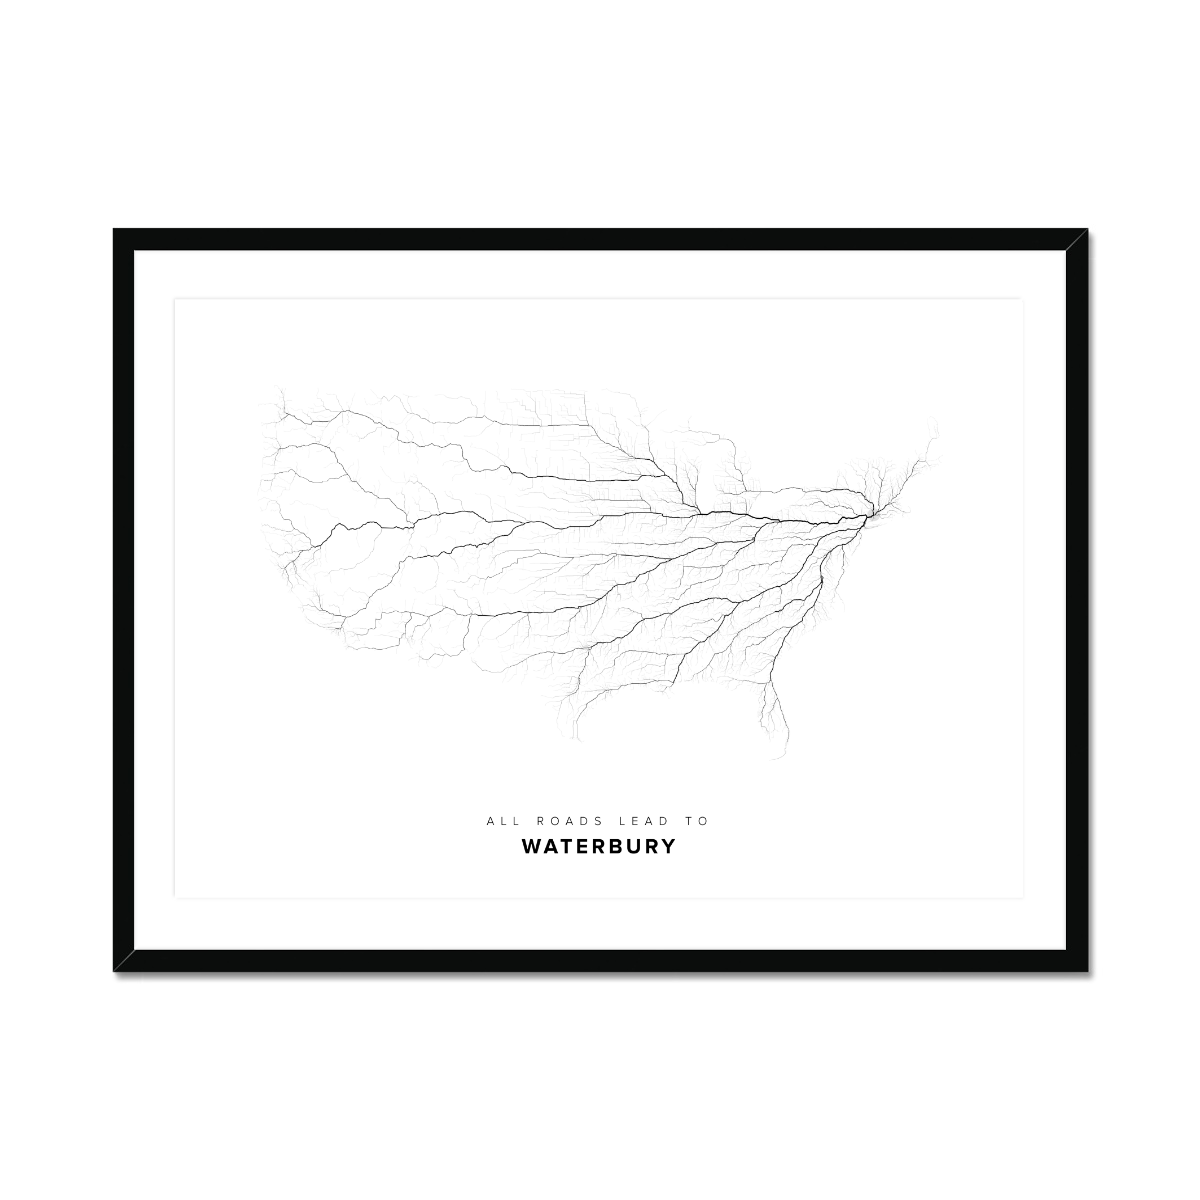 All roads lead to Waterbury (United States of America) Fine Art Map Print